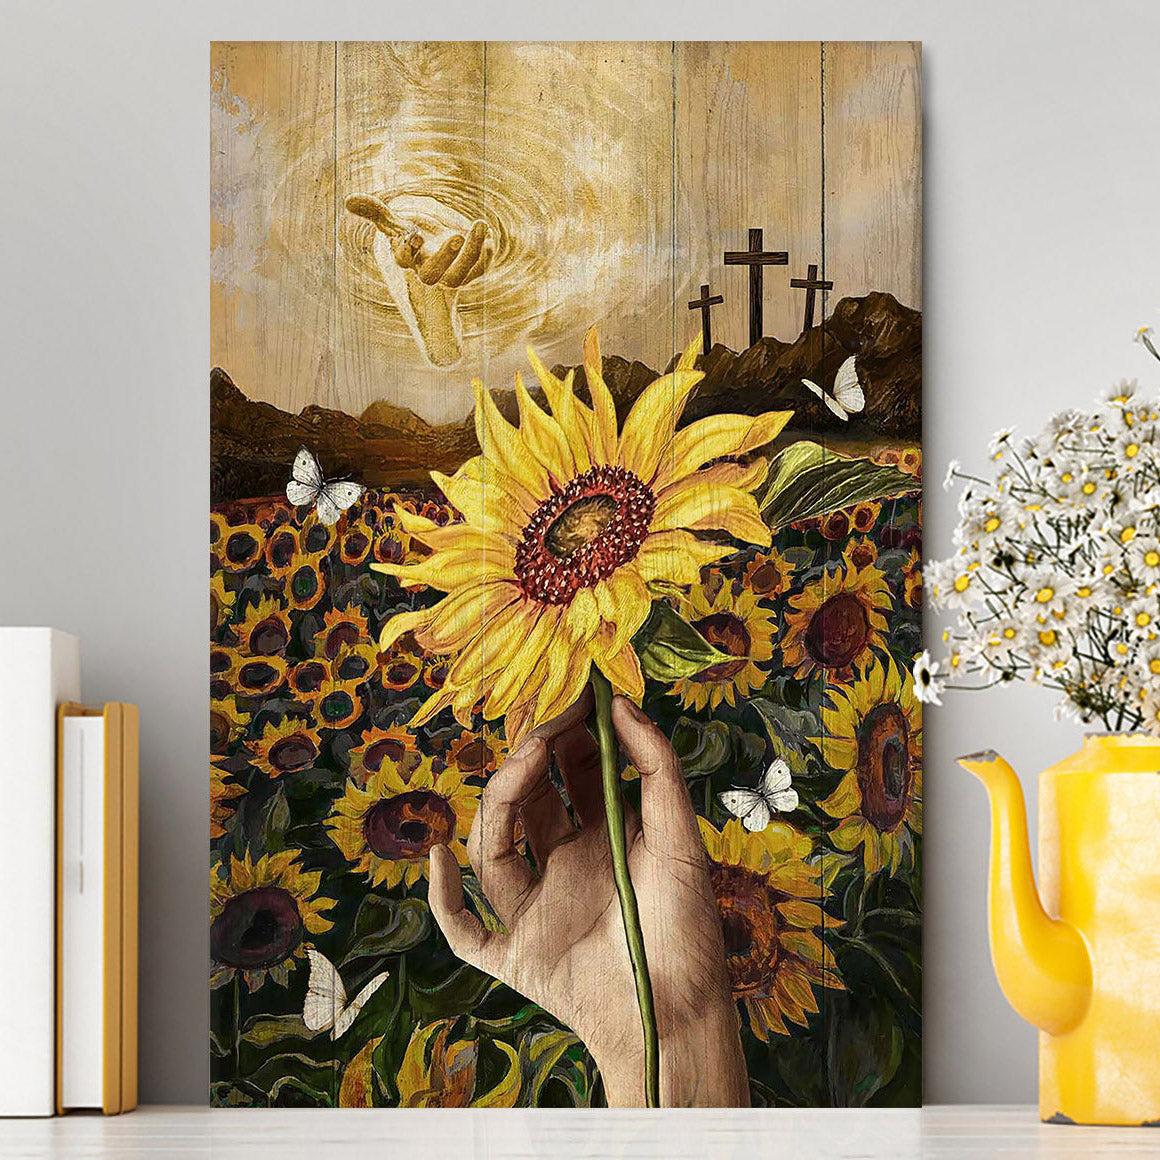 The Hand Of God Sunflower Field White Butterfly Canvas Art - Christian Art - Bible Verse Wall Art - Religious Home Decor